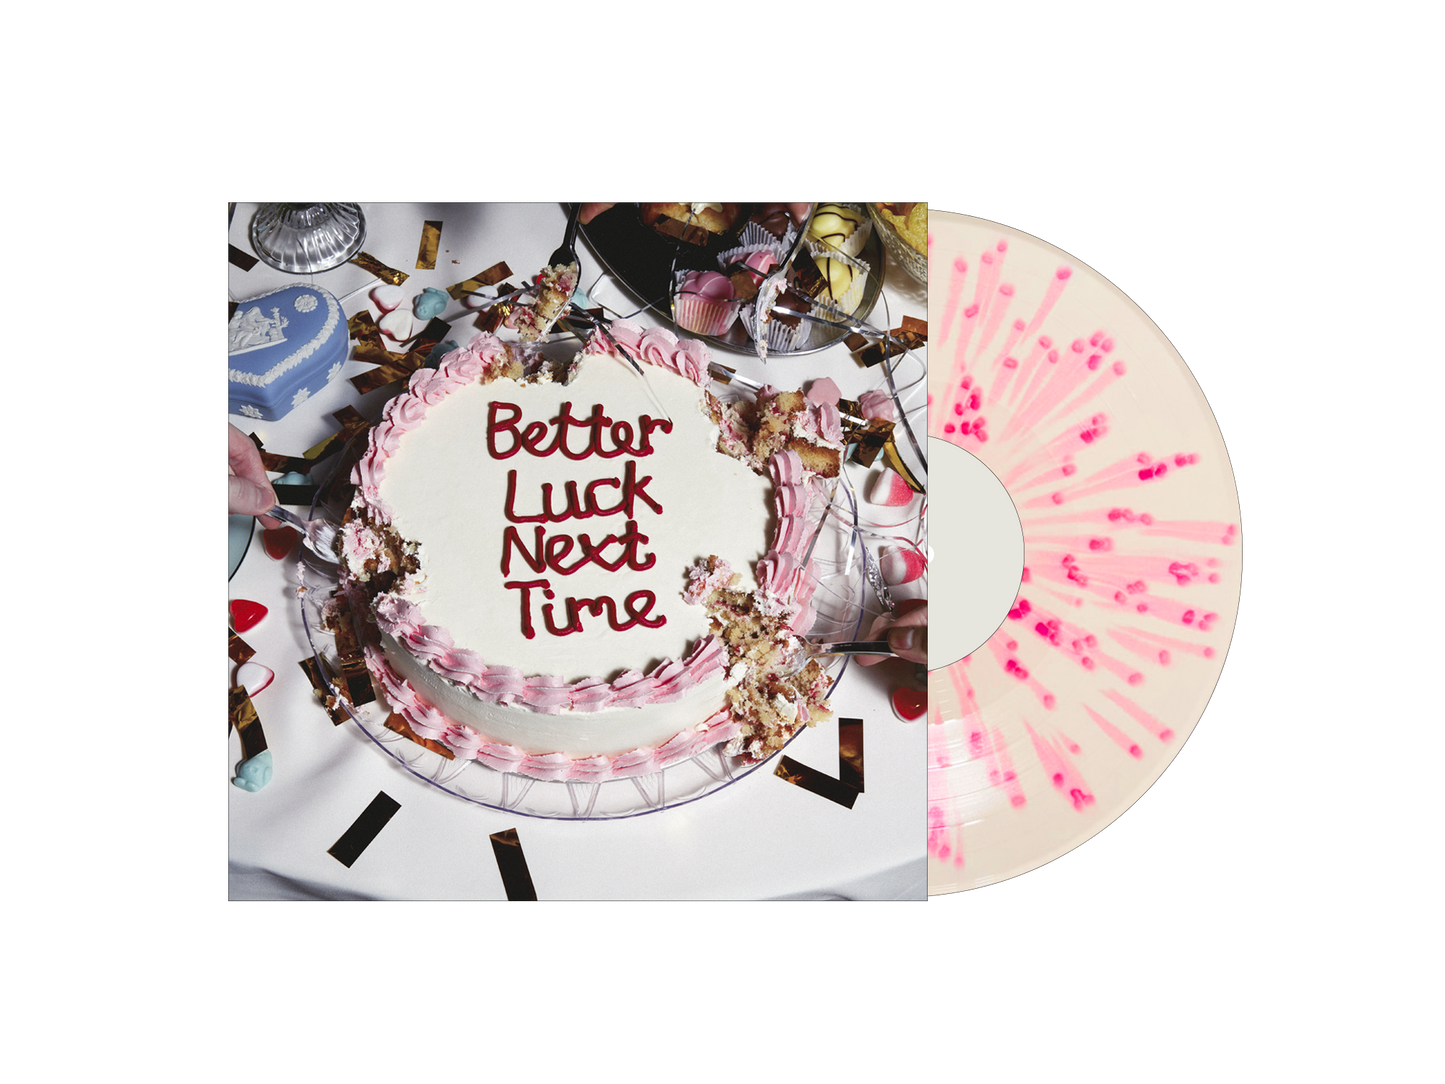 Sundara Karma - Better Luck Next Time  - Limited Edition Pink and Cream Splatter Edition Vinyl